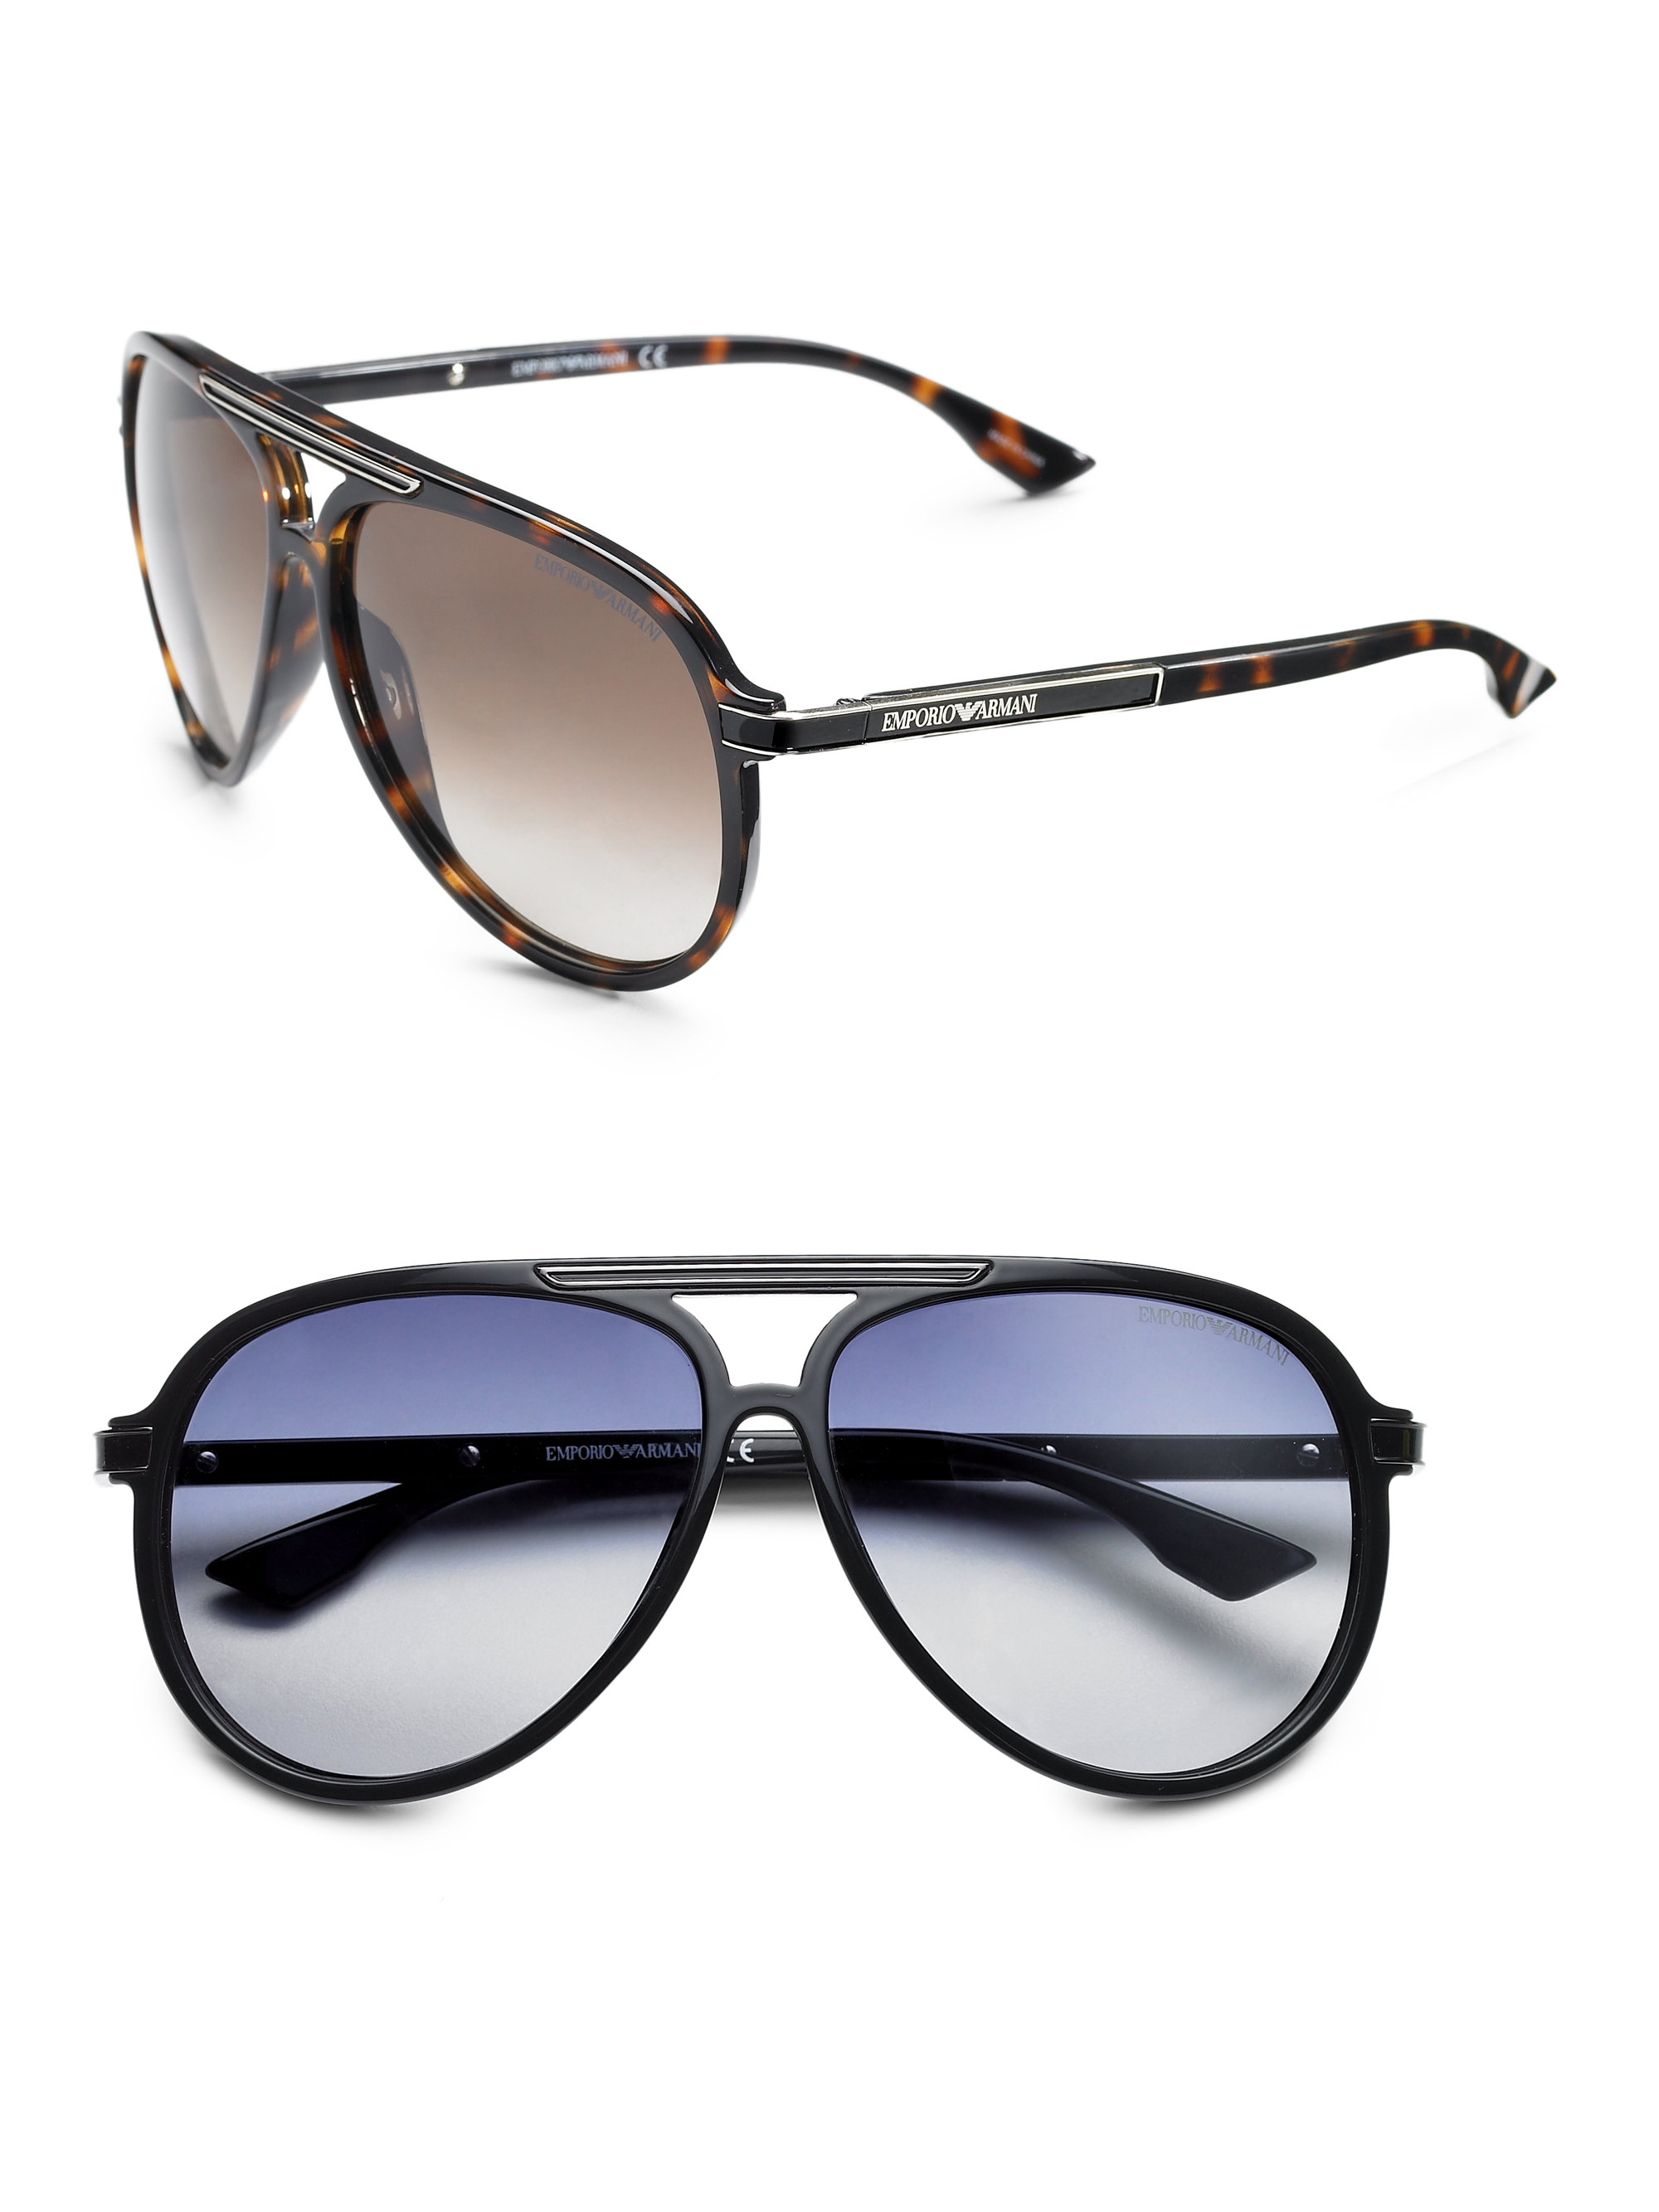 Emporio Armani Plastic Aviator Sunglasses in Black for Men - Lyst